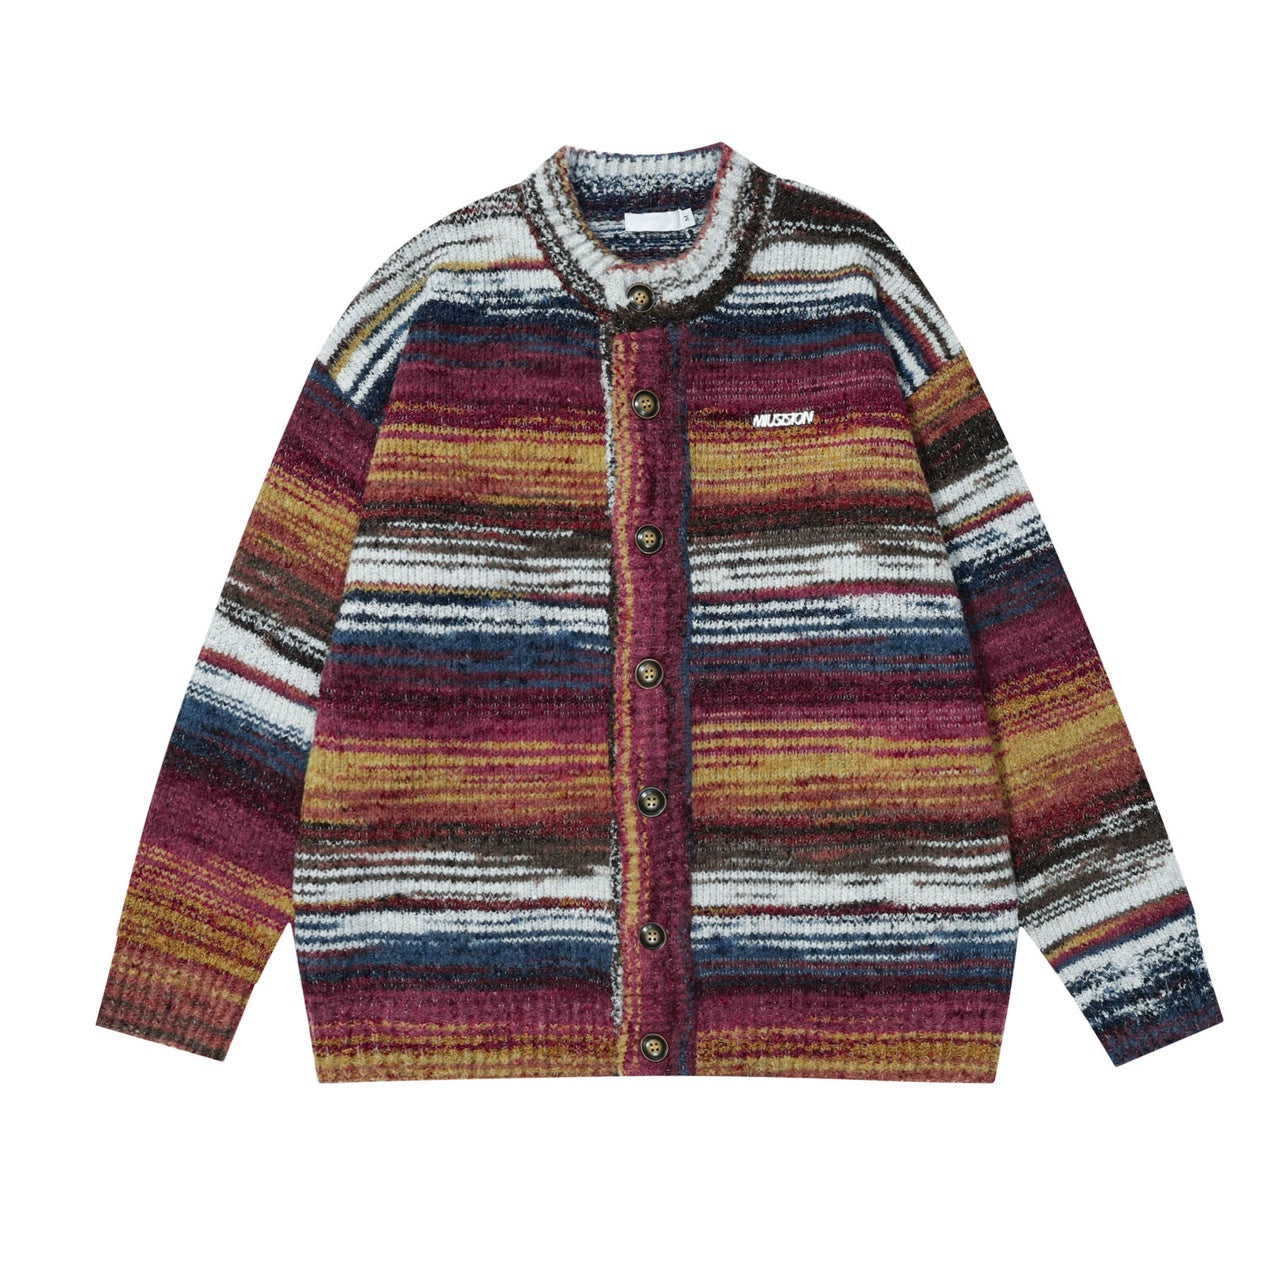 Mz American vintage gradient stripe cardigan sweater men's autumn